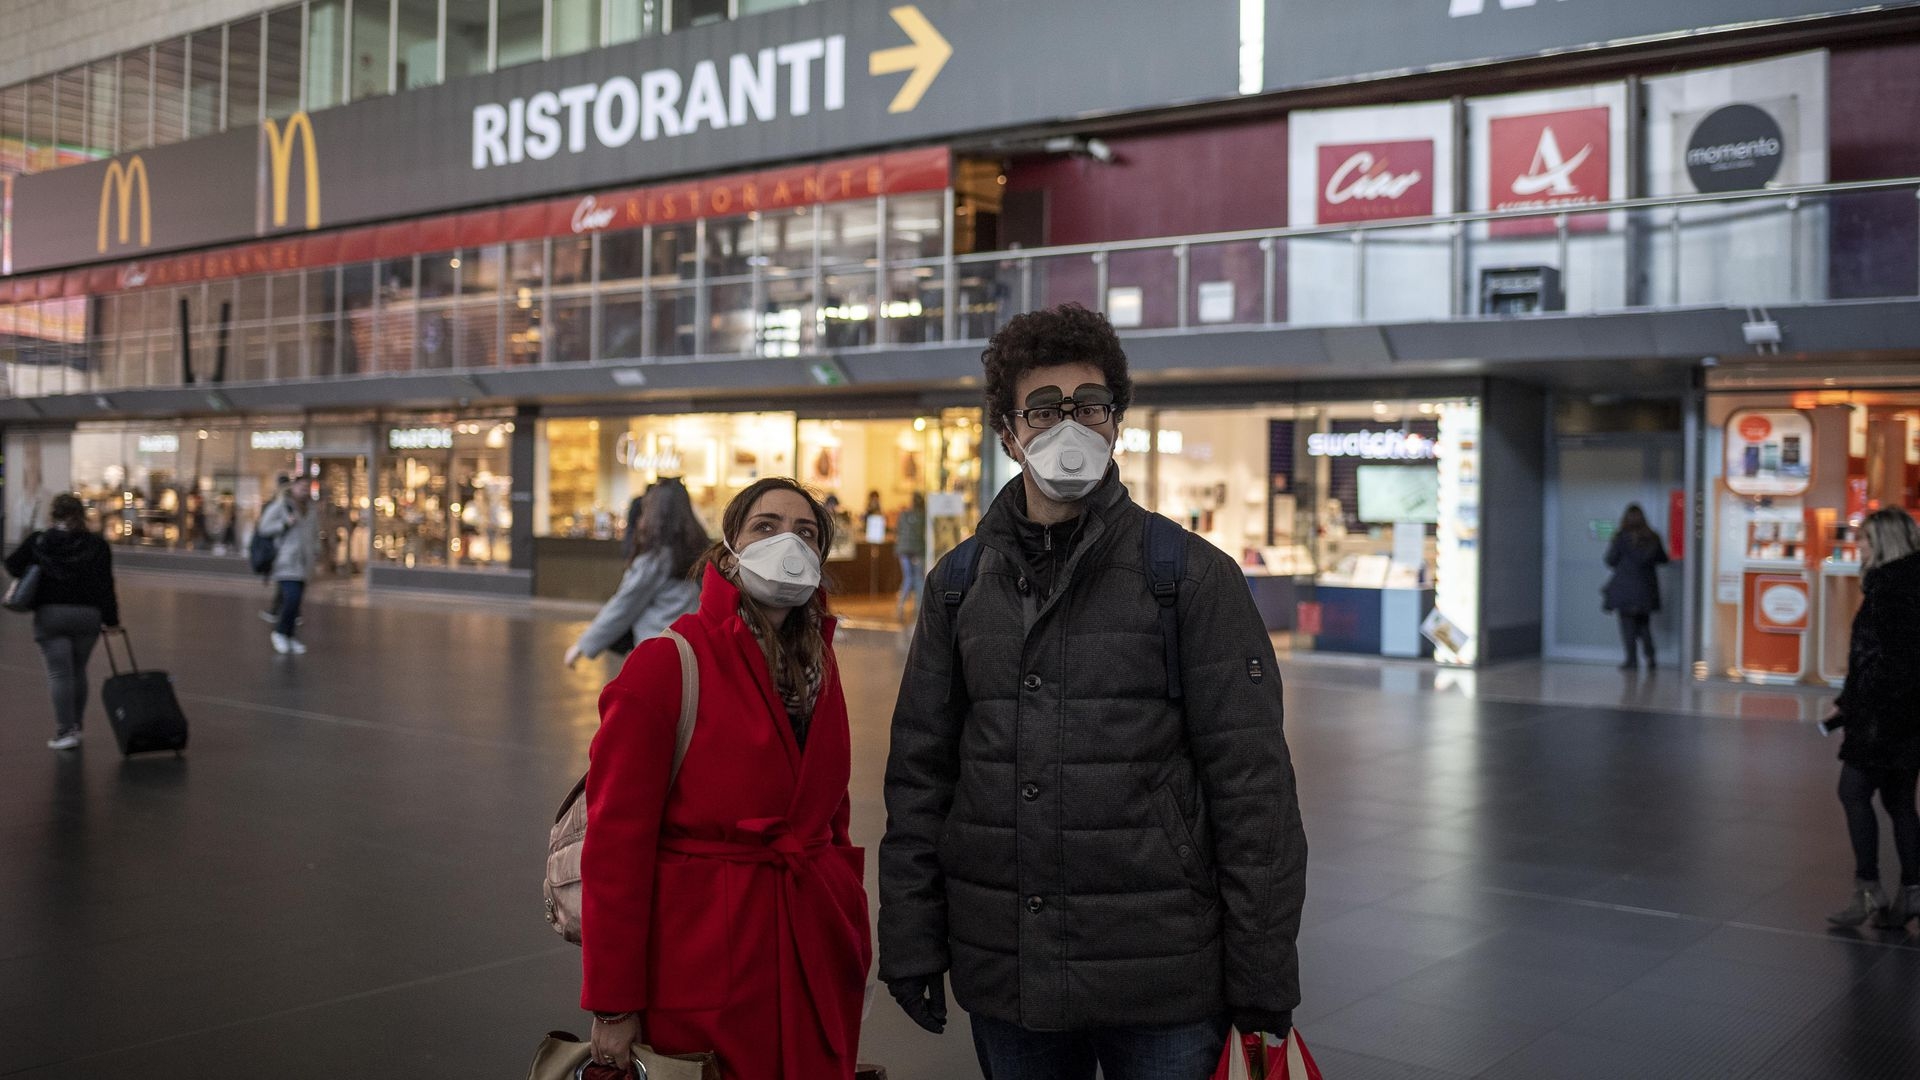 All of Italy located under coronavirus lockdown